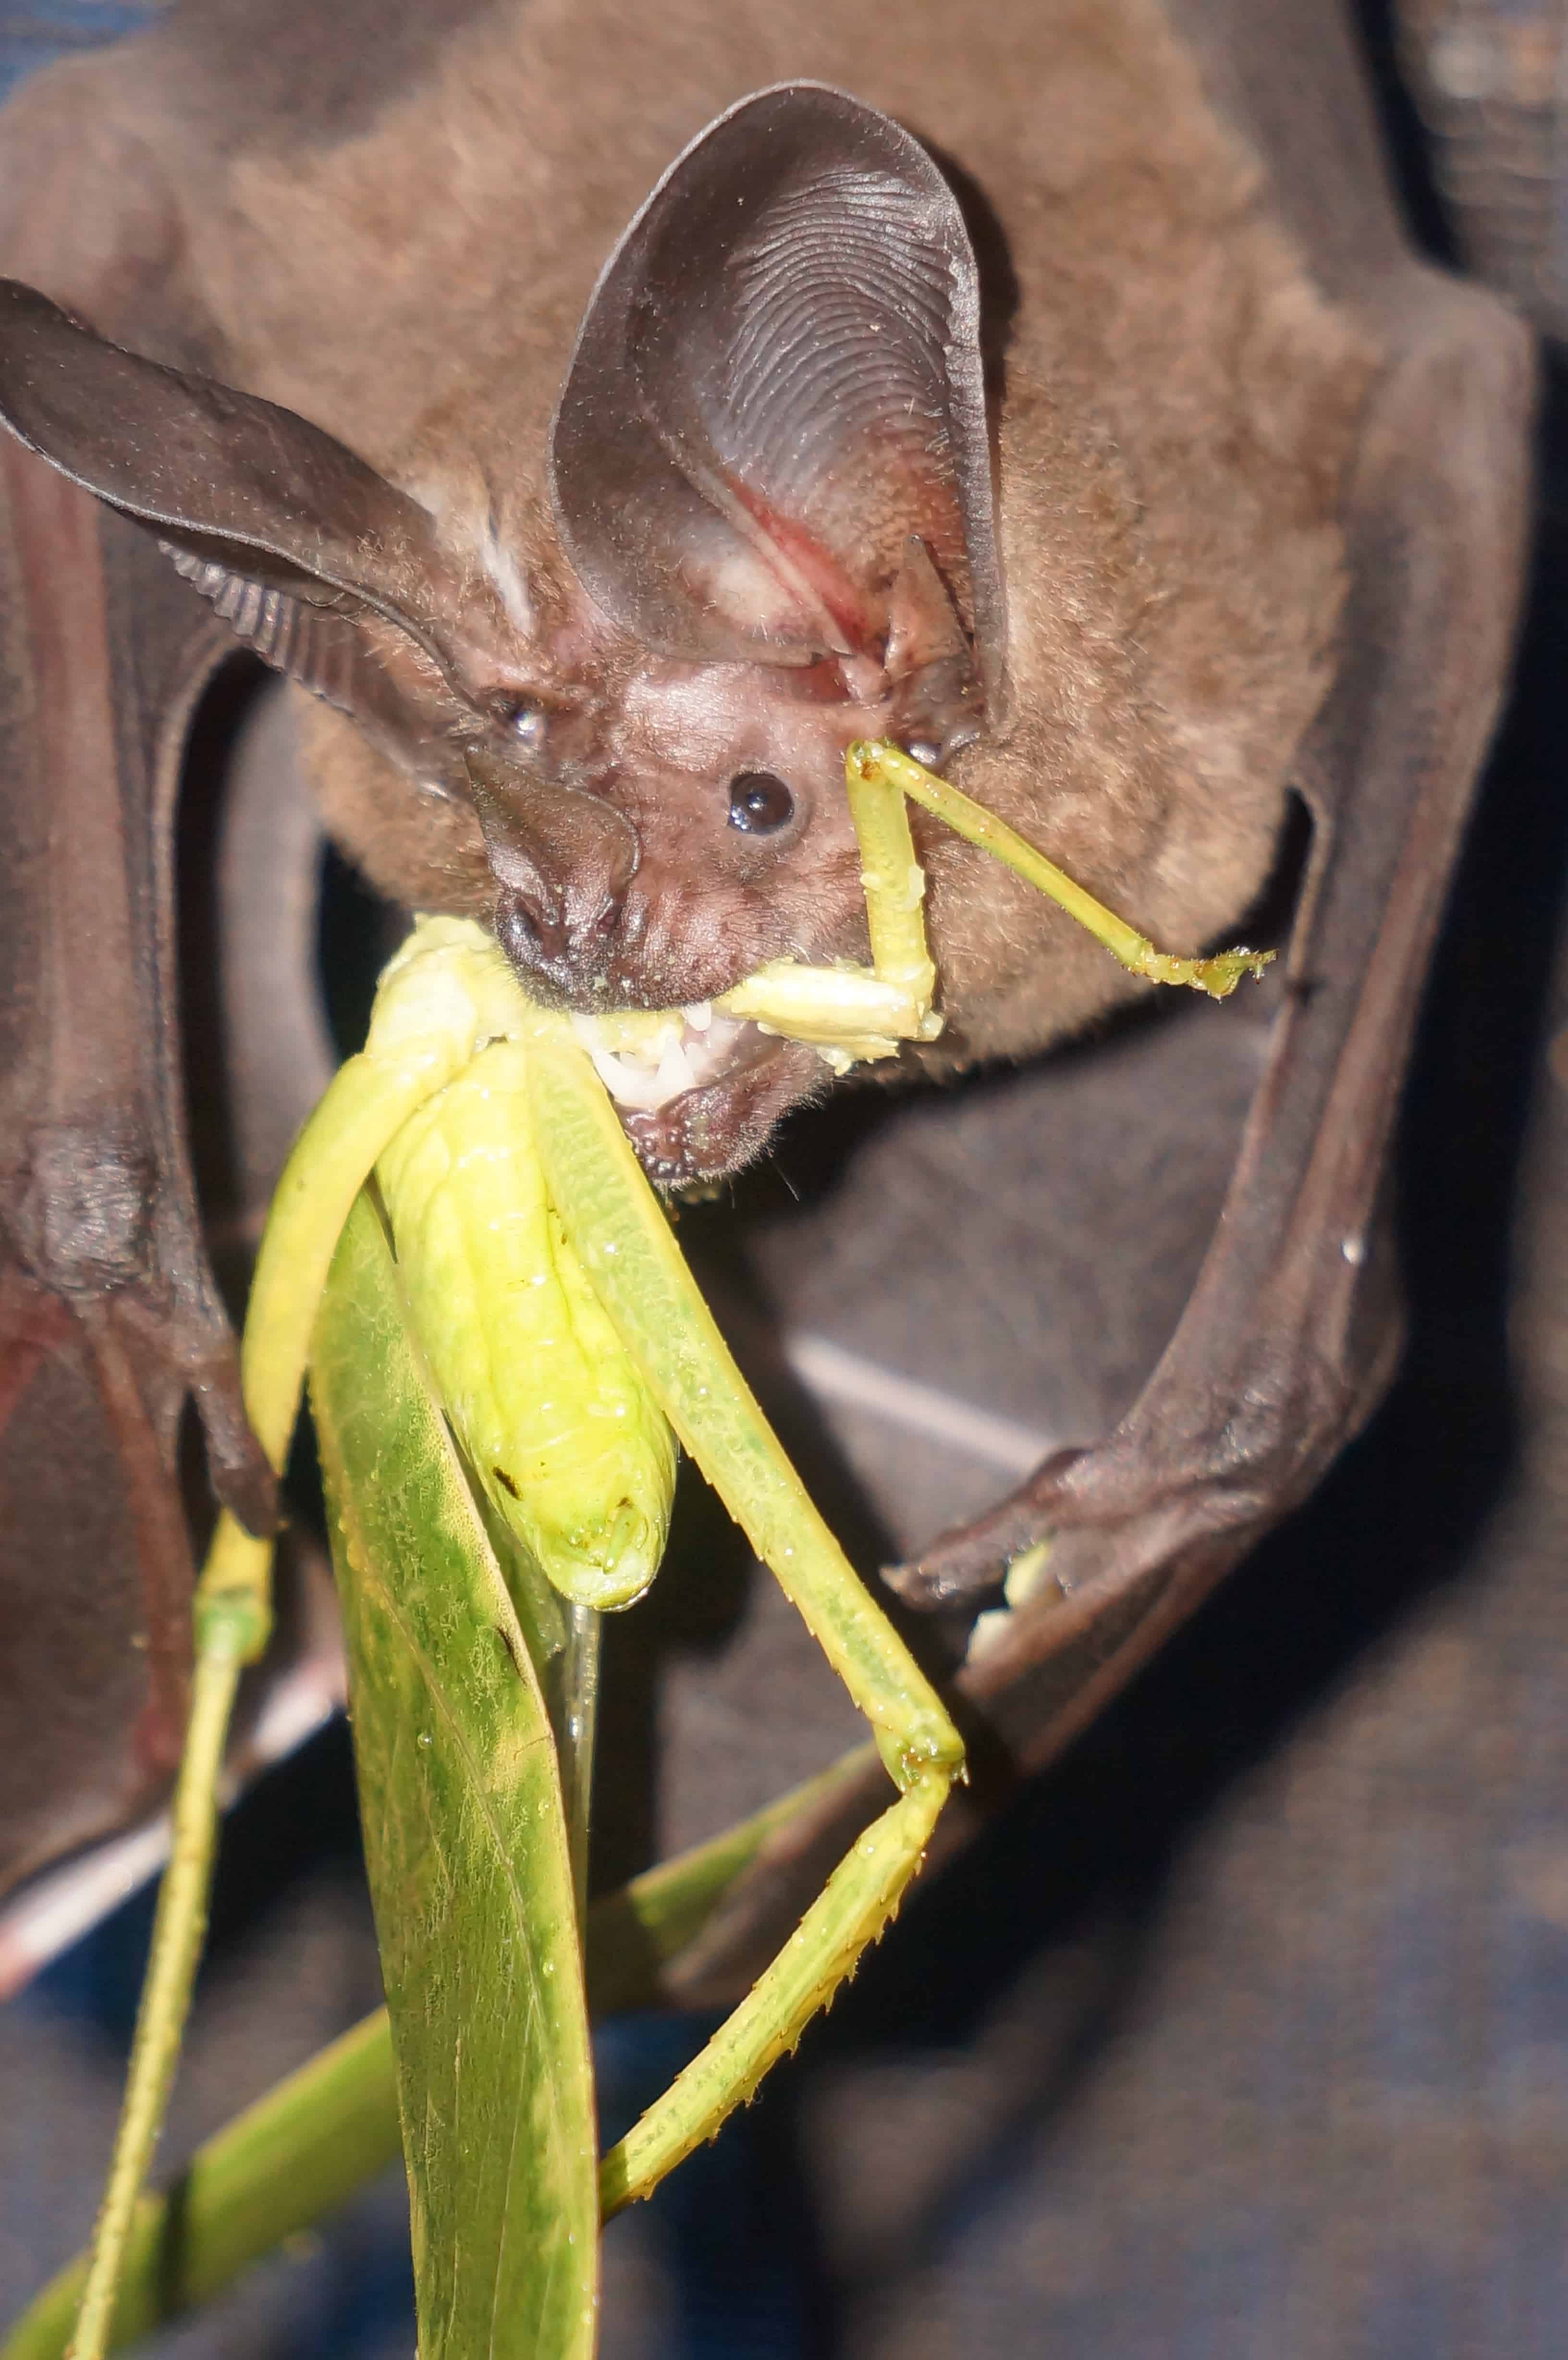 20 Reasons to Appreciate Bats (U.S. National Park Service)